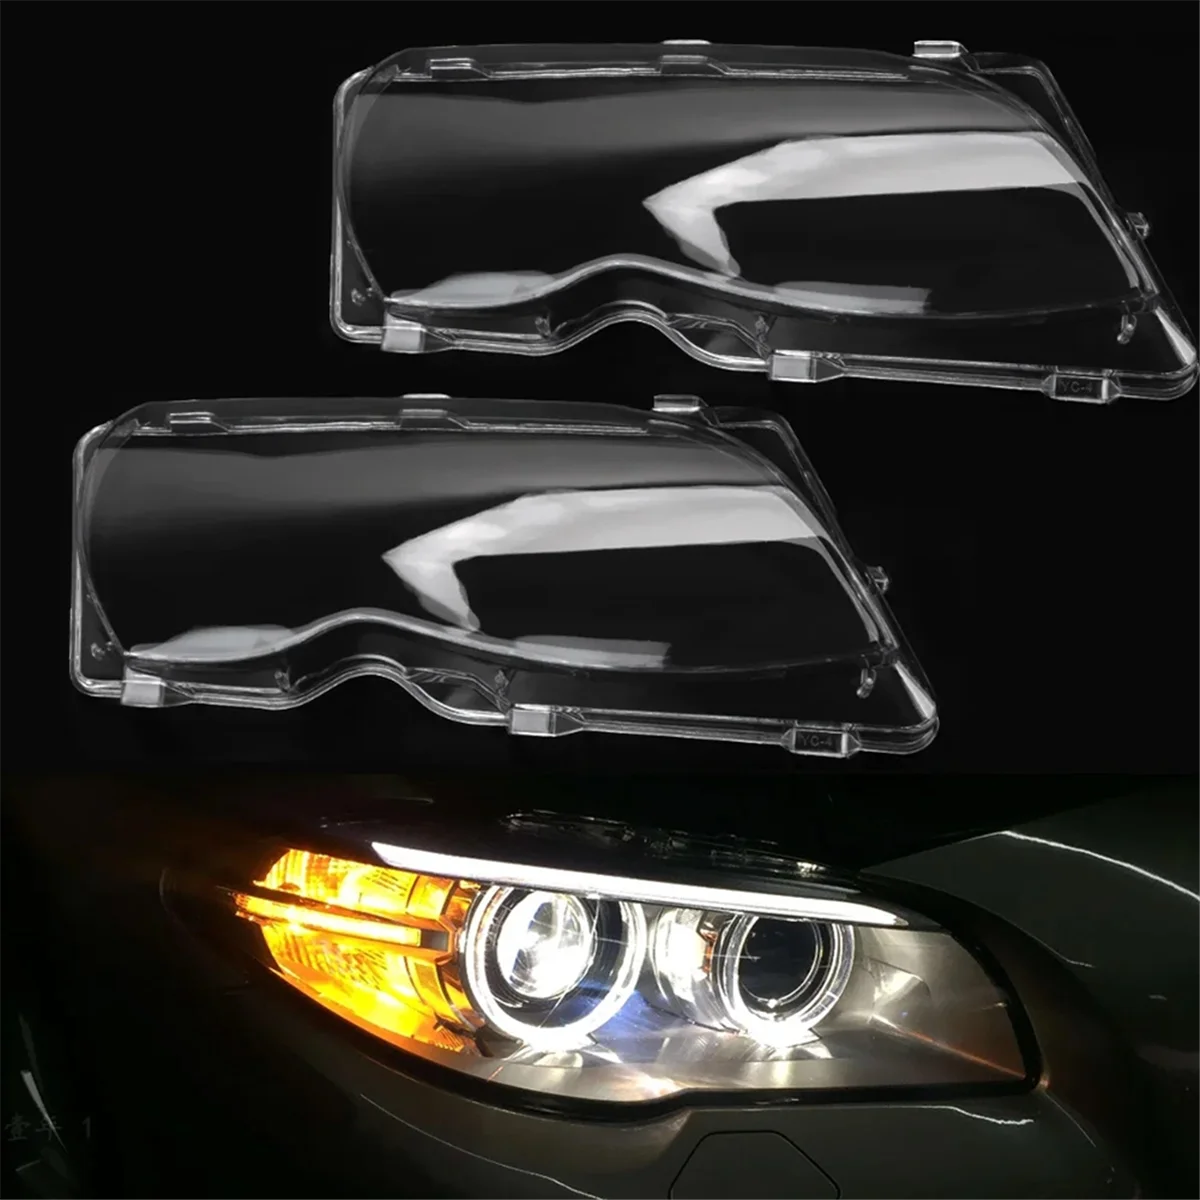 

Car Front Headlight Lens Cover Head Light Lampshade for BMW 3 Series E46 4 Door 2002-2005 Headlight Housing